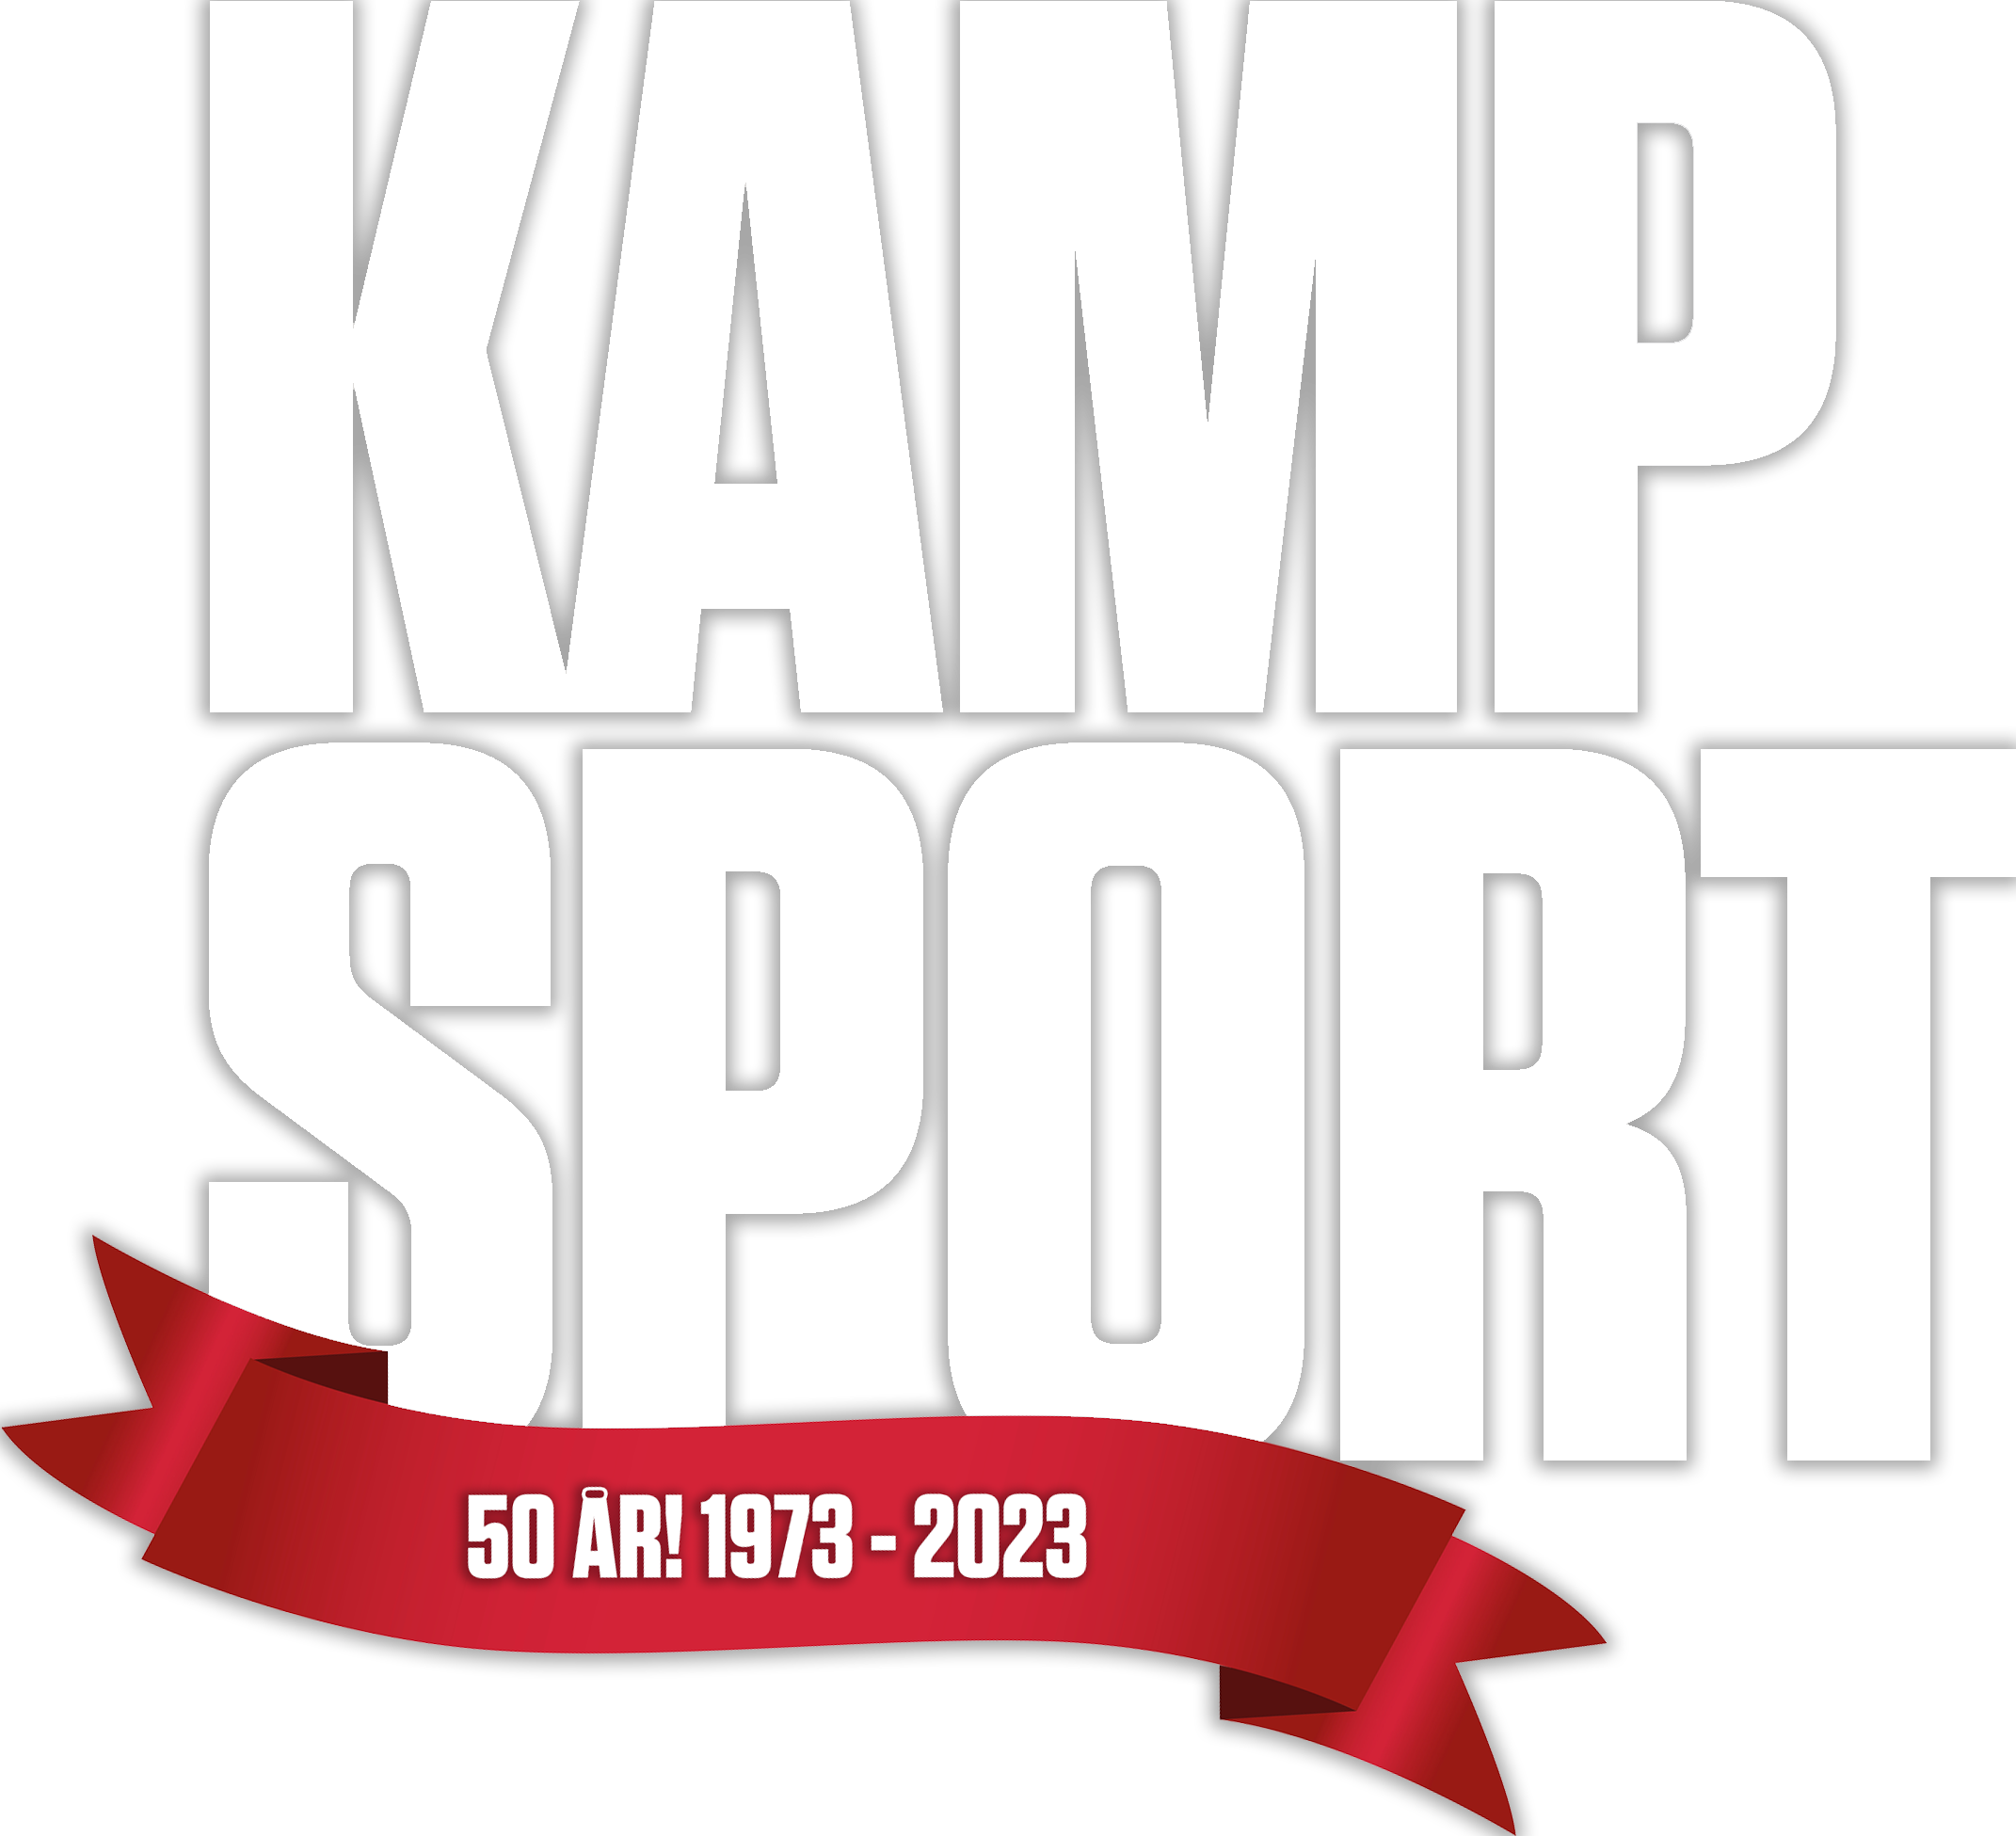 Norges Kampsportforbund - logo (white)